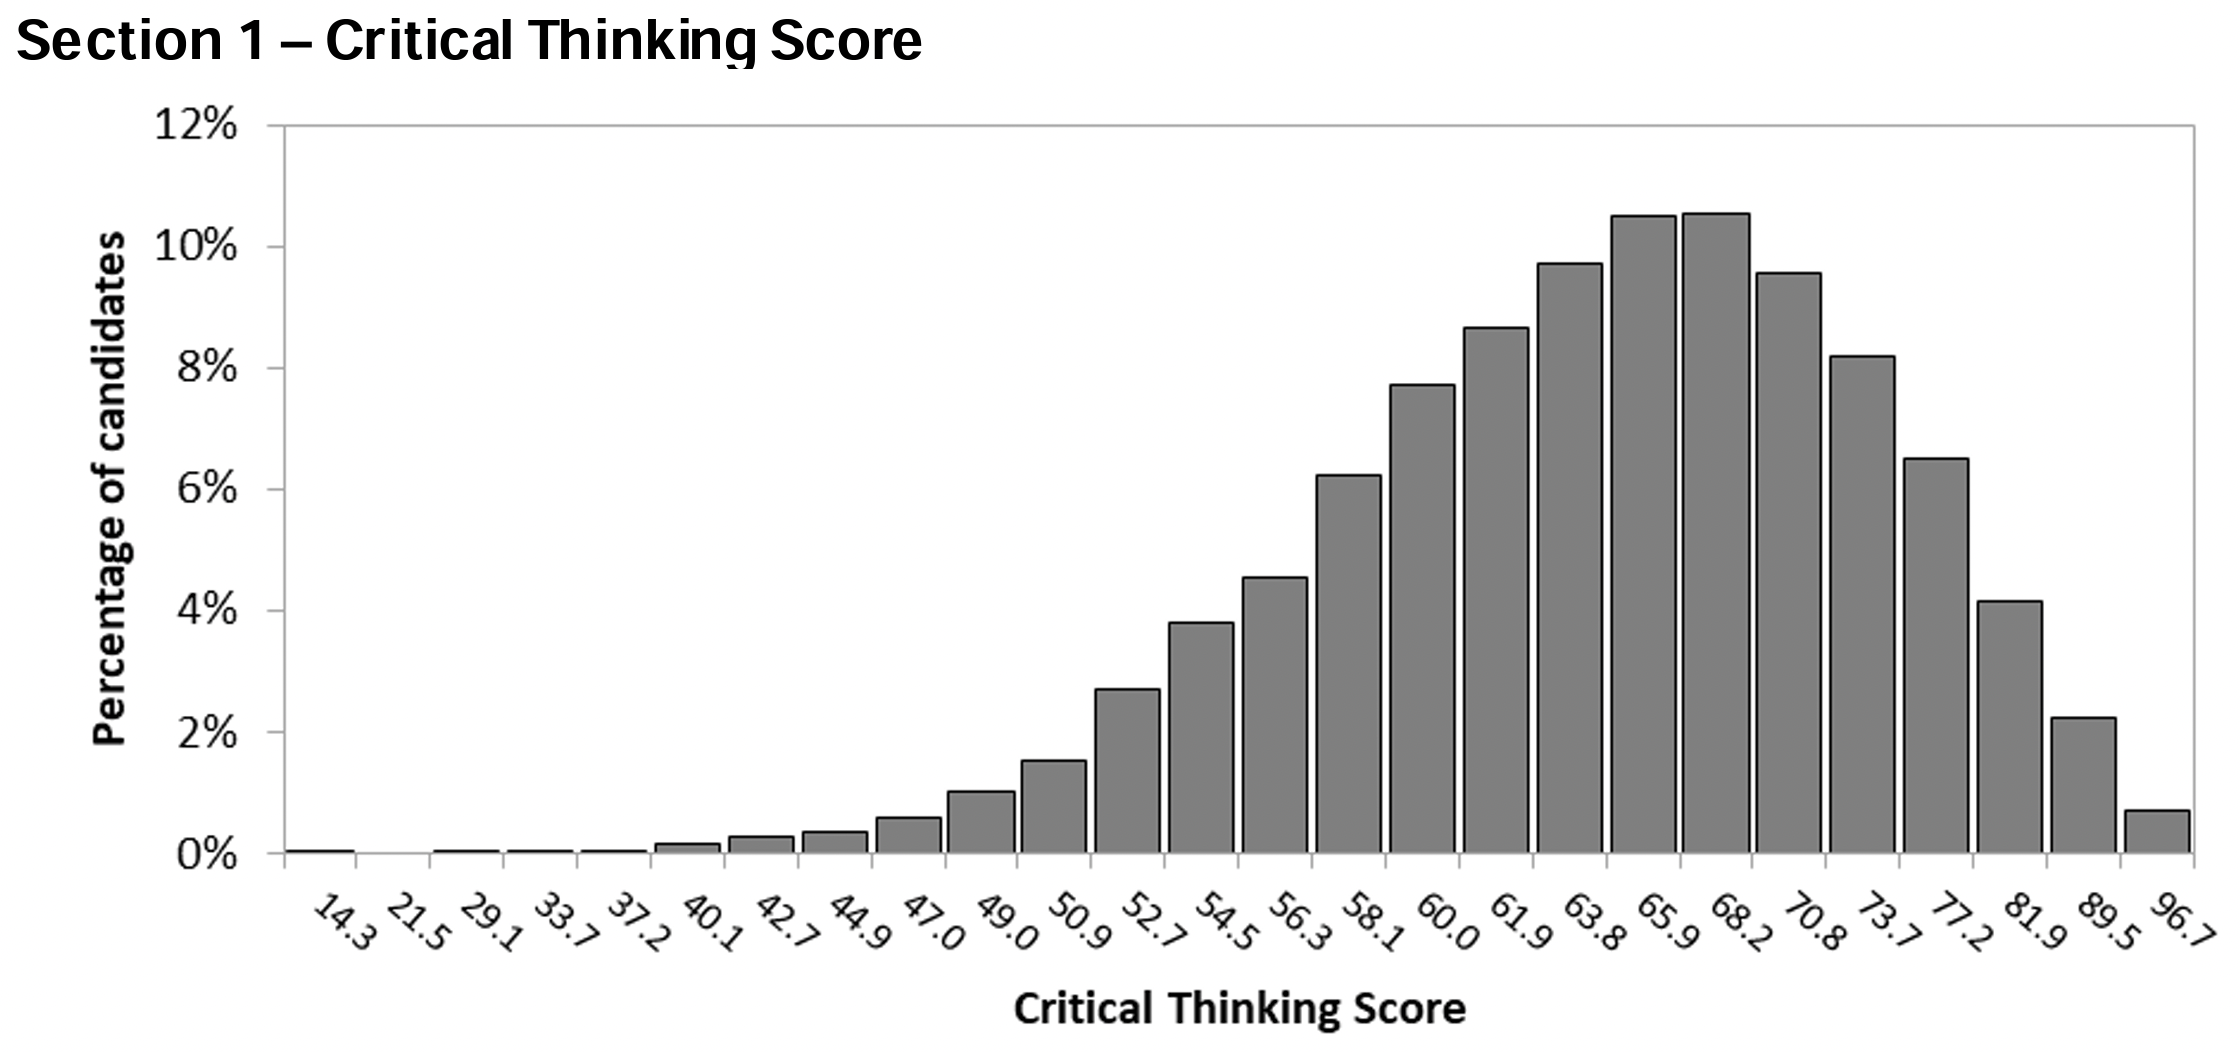 TSA Section 1 Critical Thinking Score distribution in 2022